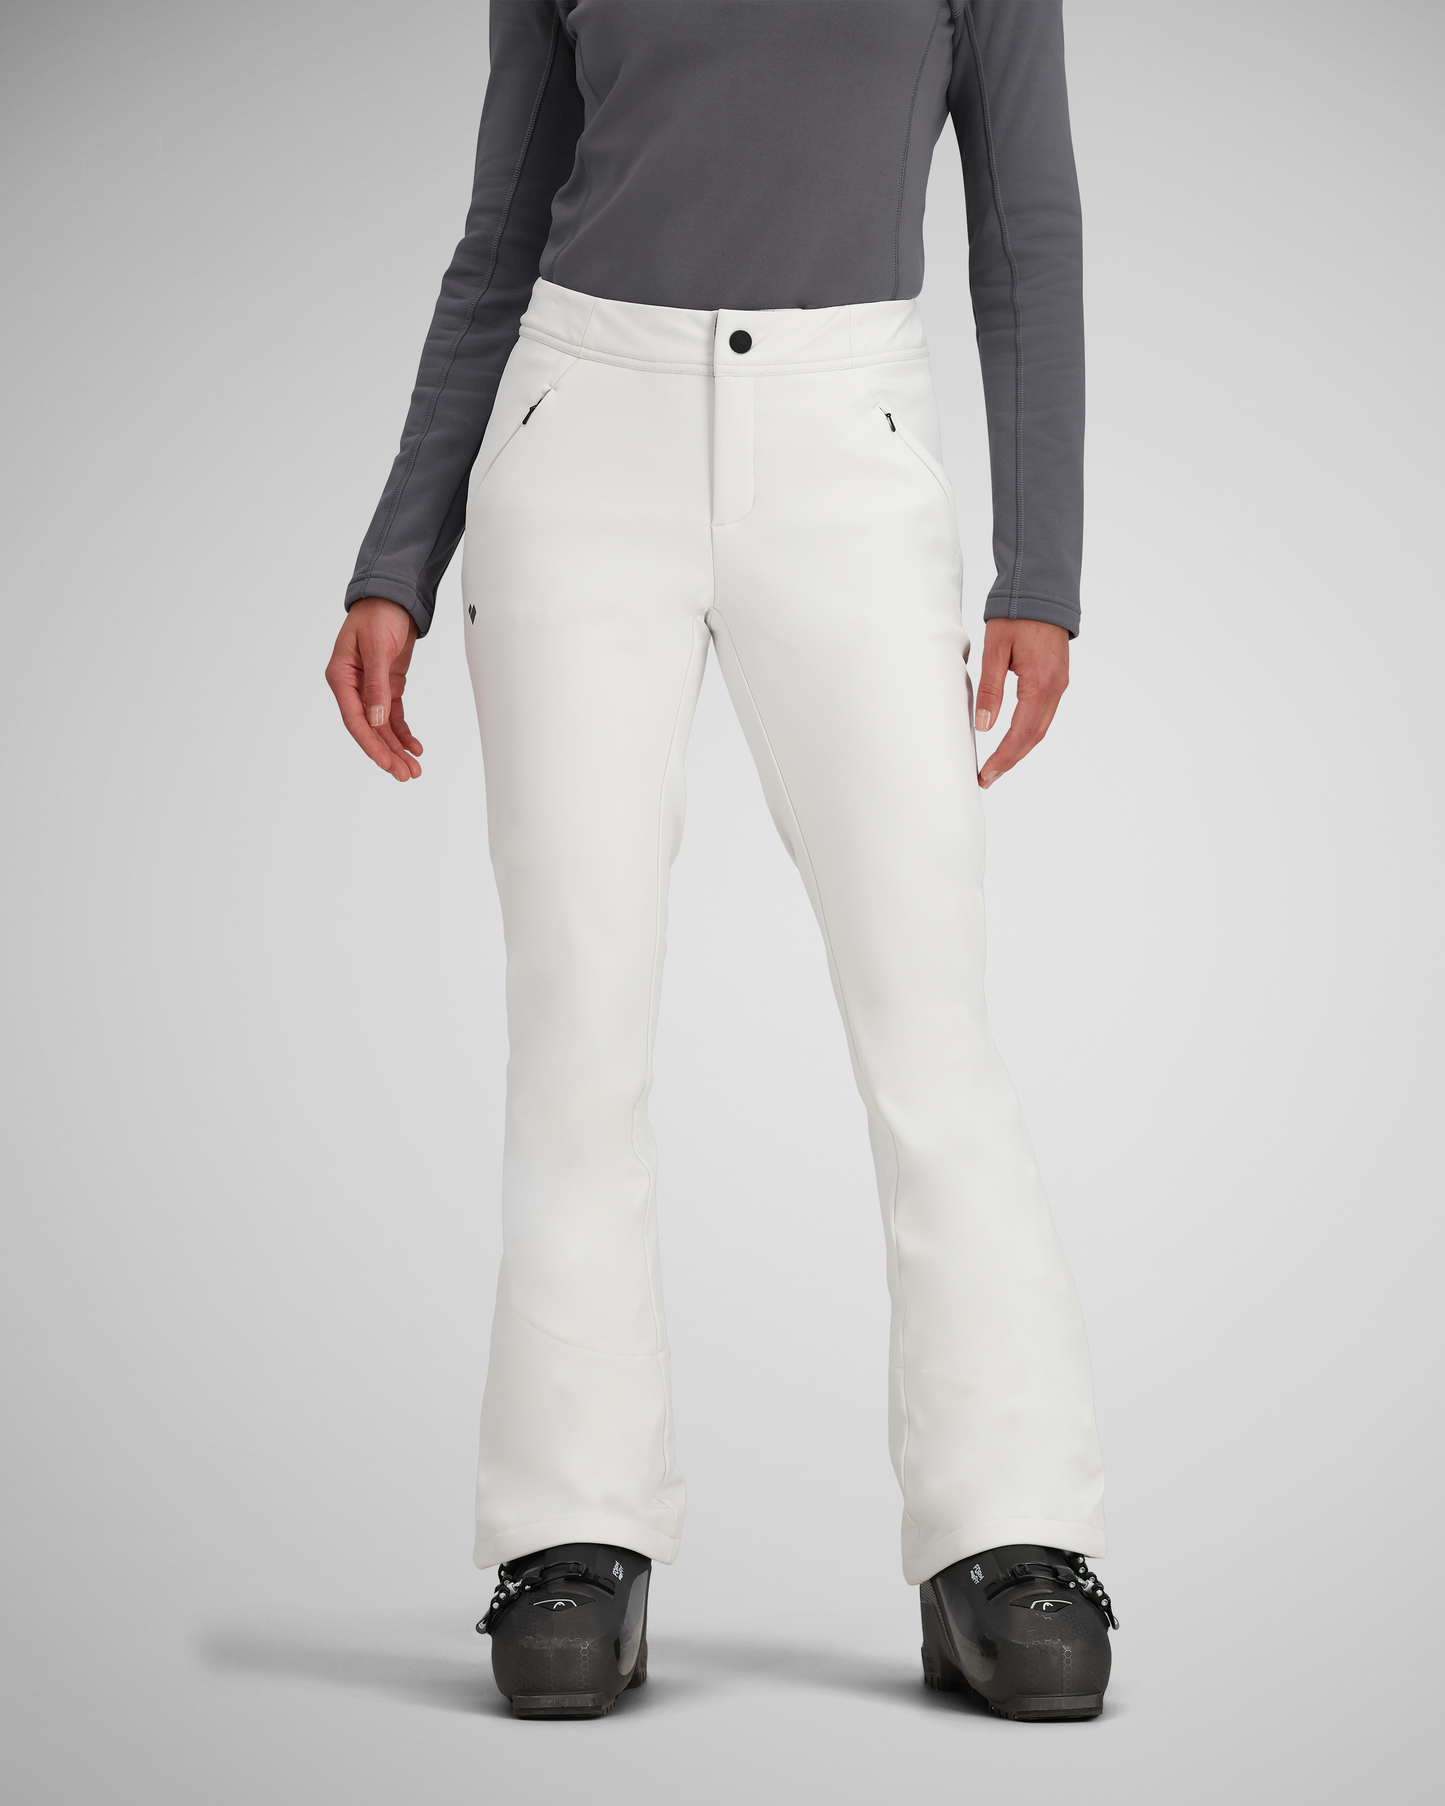 New Obermeyer Harlow Womens Ski Pants, Size 10 Short, $80 or best